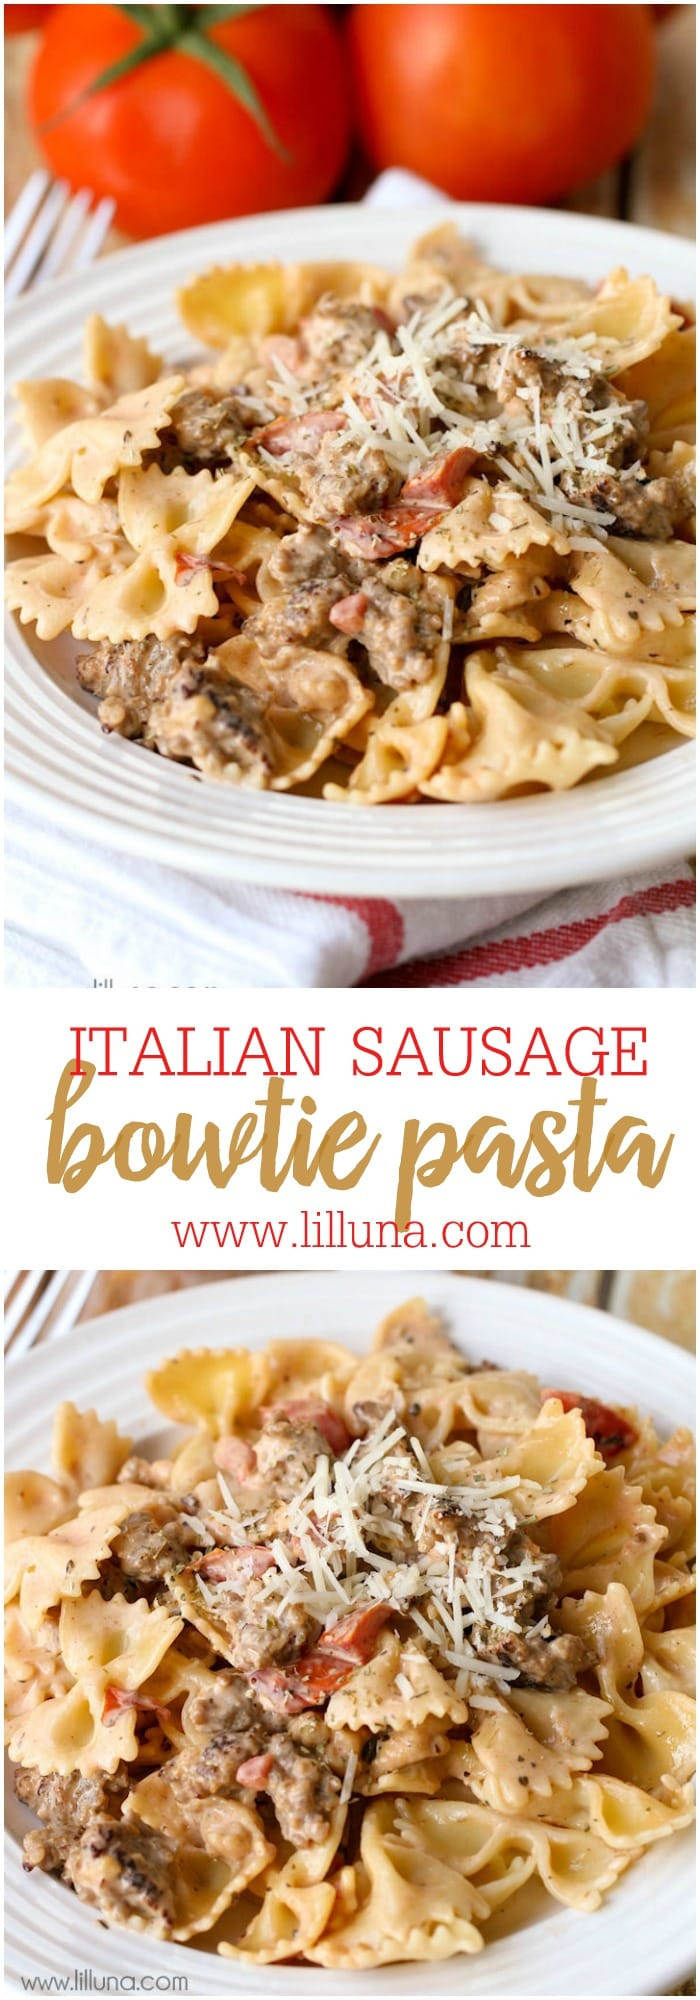 Italian Sausage Recipes Pasta
 EASY Italian Sausage Pasta